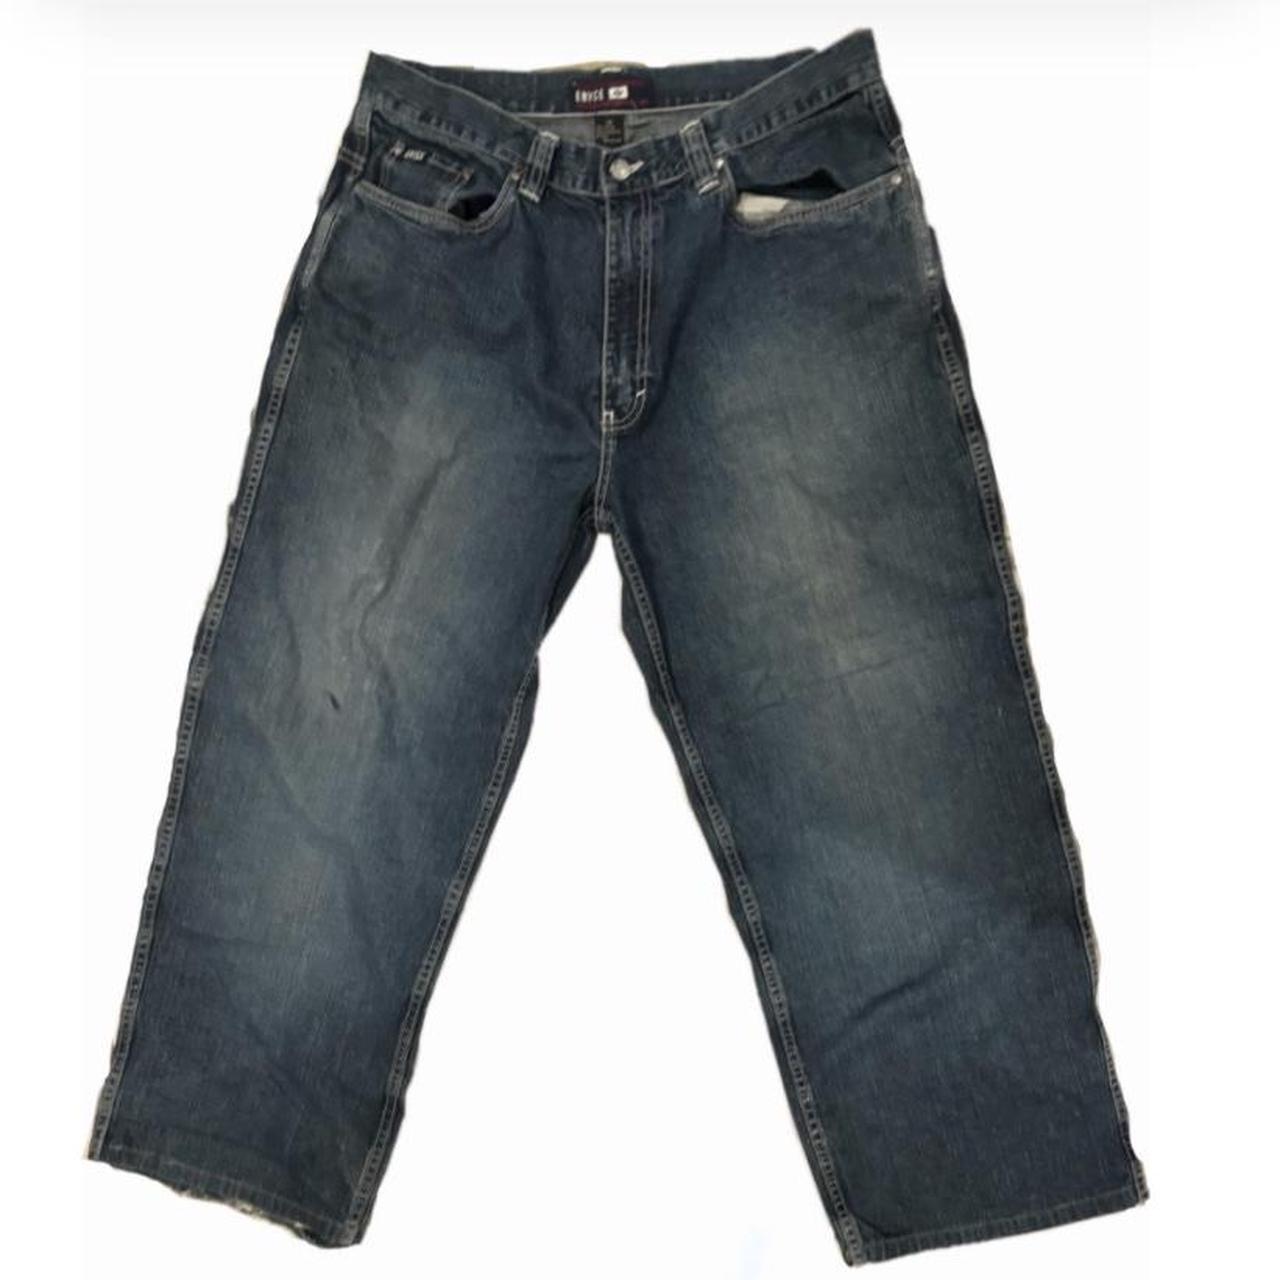 Enyce baggy size 36 jeans 🤝 #vintage #baggy #skater... - Depop